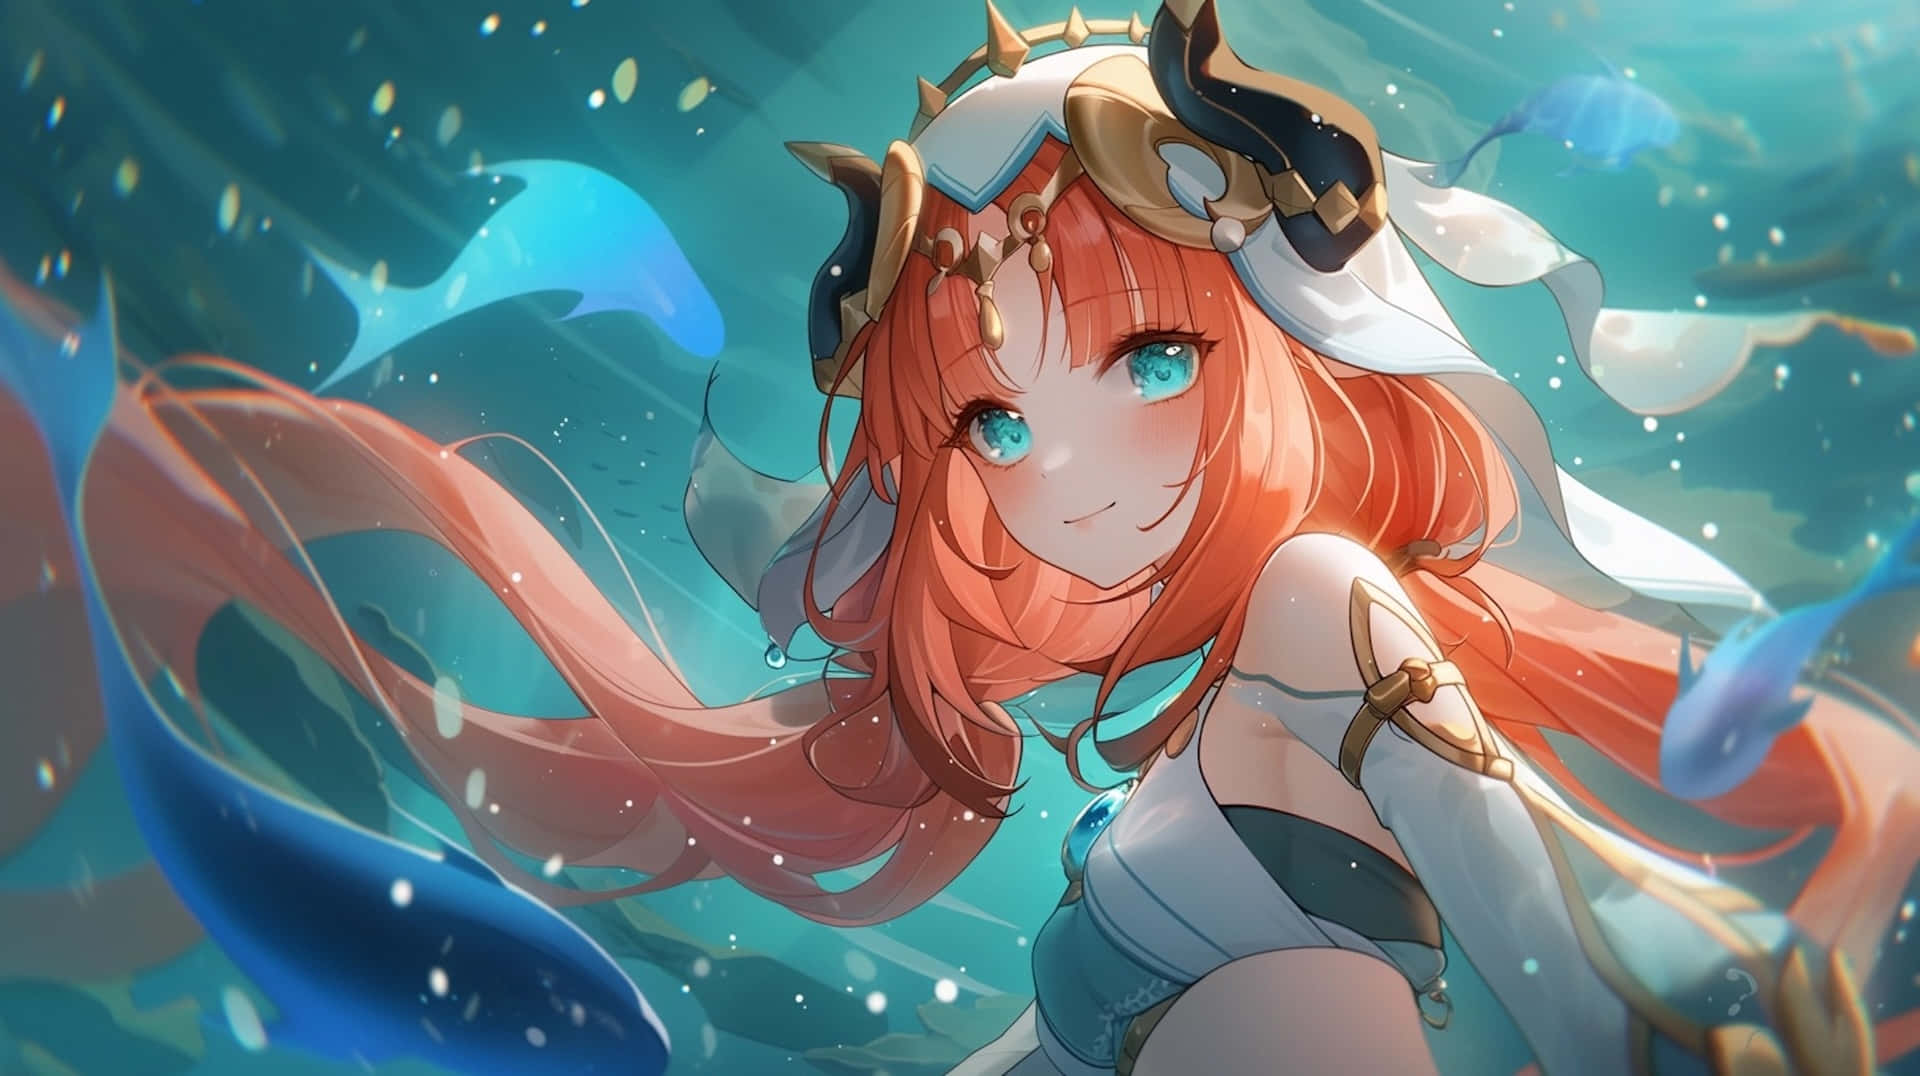 Aquatic Adventure Anime Artwork Wallpaper